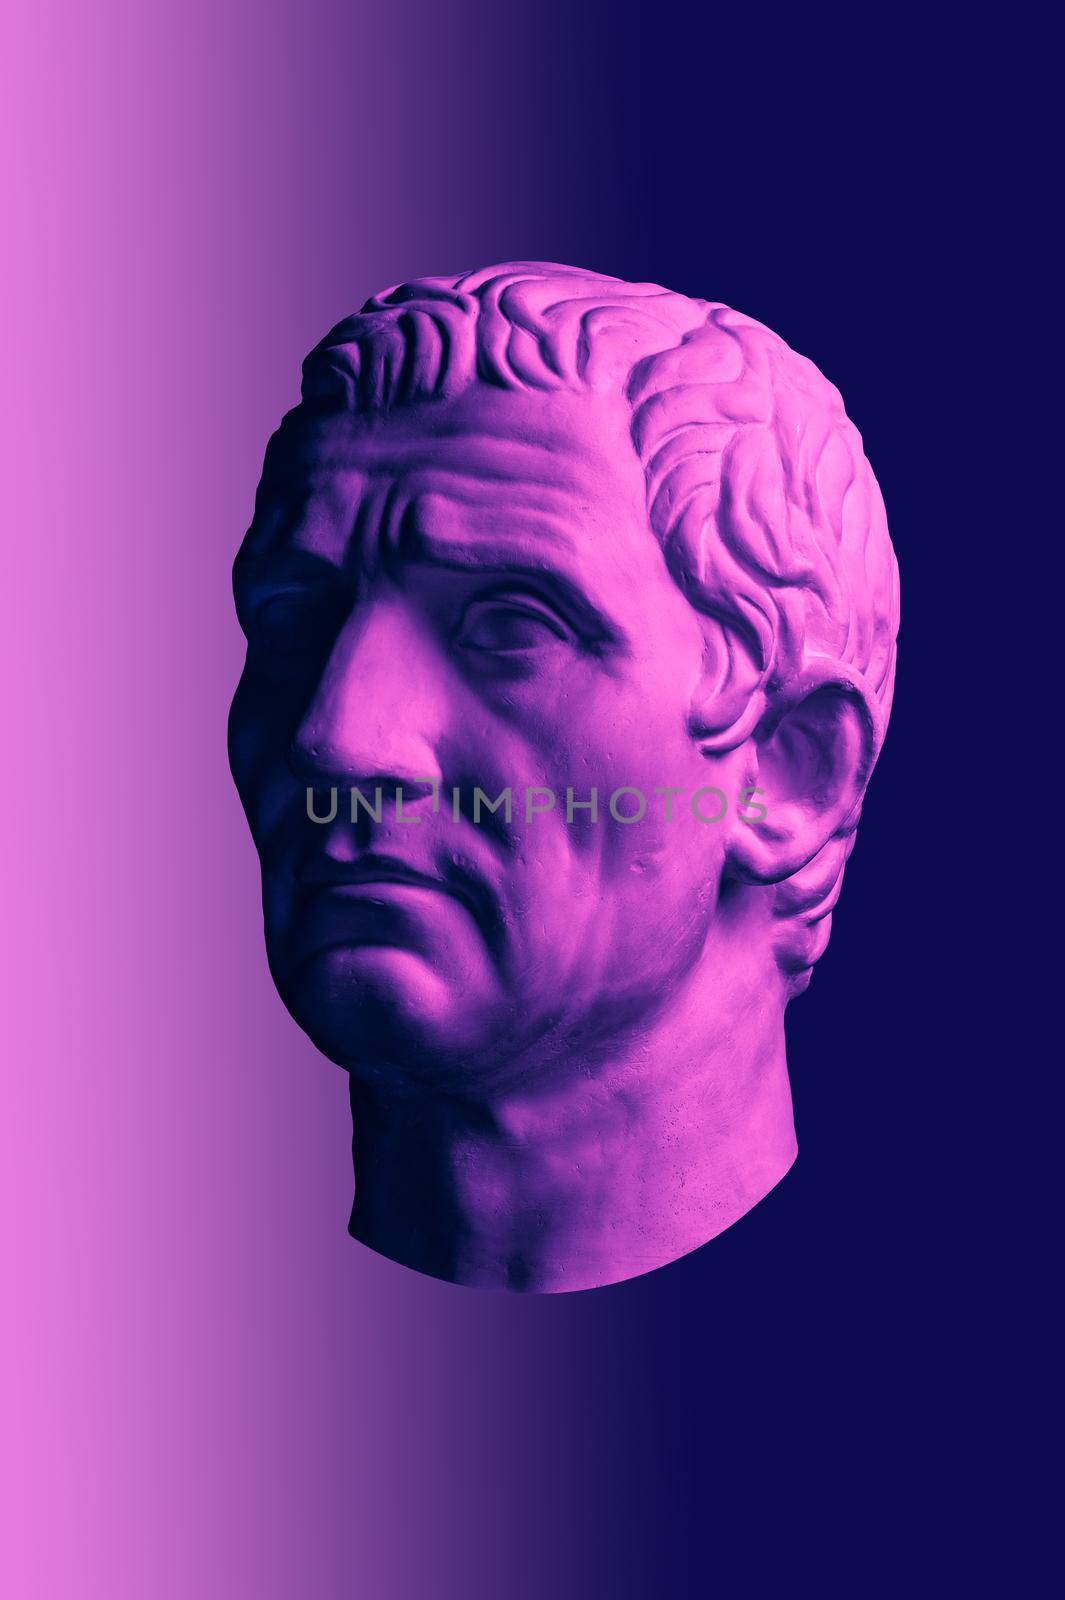 Statue of Guy Julius Caesar Octavian Augustus. Creative concept colorful neon image with ancient roman sculpture Guy Julius Caesar head. Webpunk, vaporwave and surreal art style. Purple.